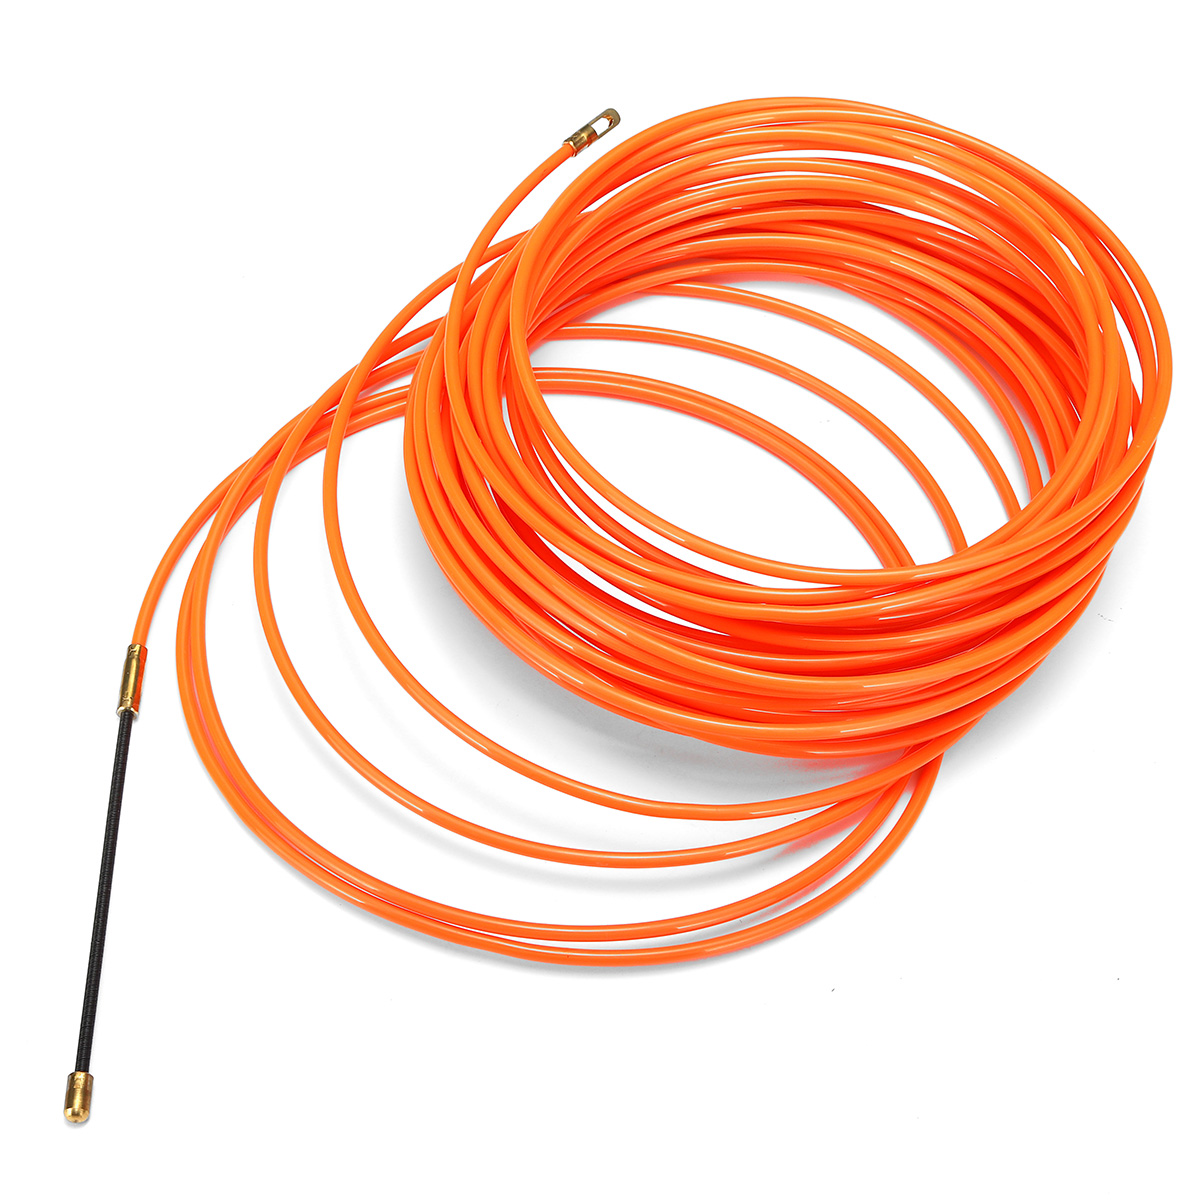 Cable-Push-Puller-Reel-Conduit-Nylon-Snake-Fish-Tape-Wire-Orange-4mm-15m-1379495-5